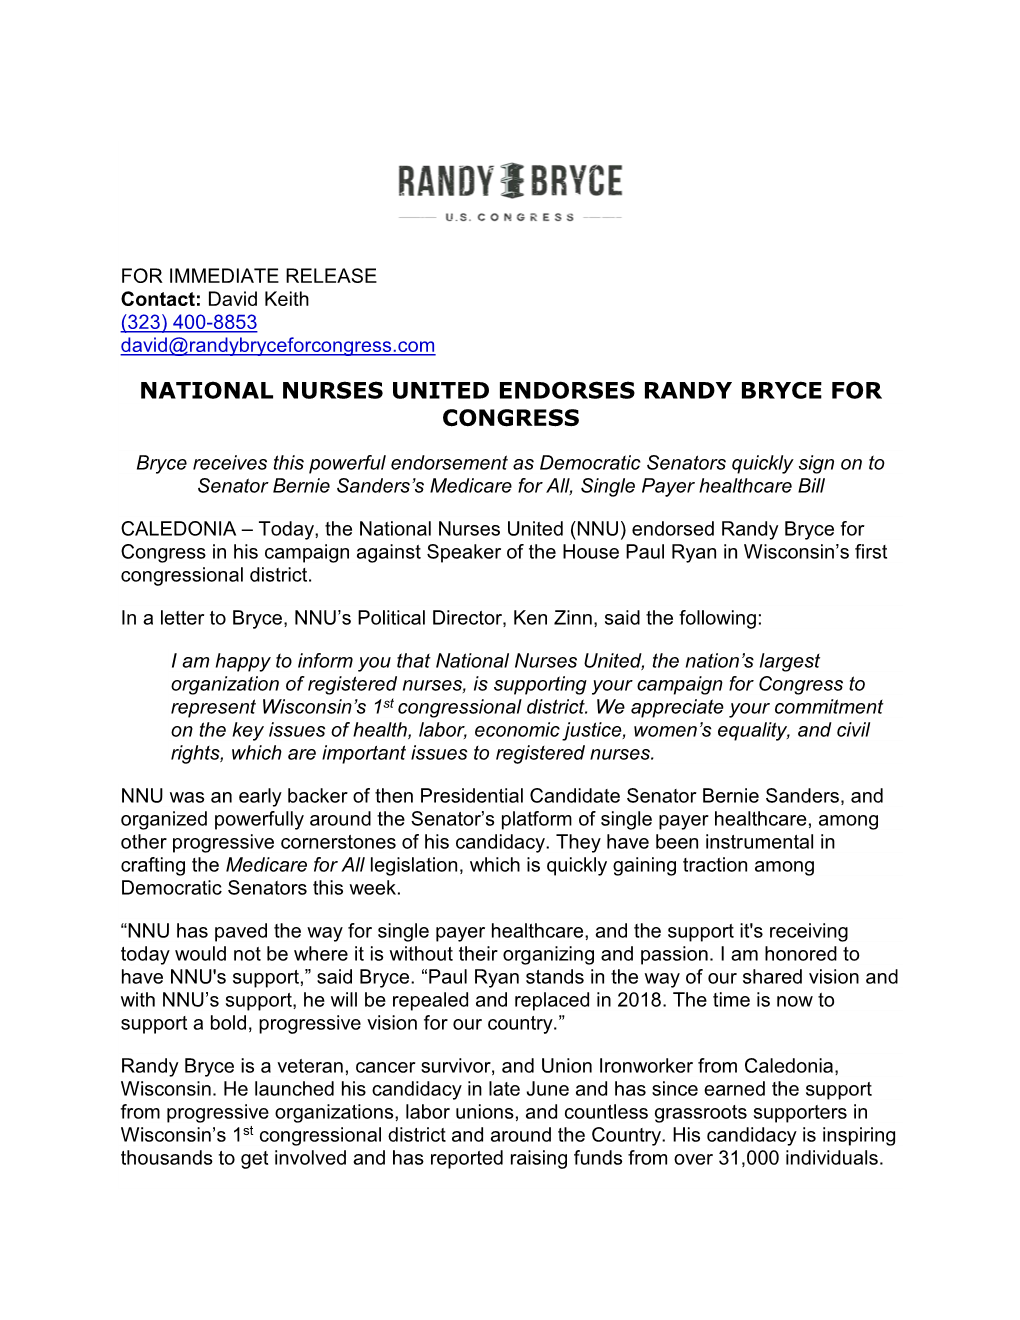 National Nurses United Endorses Randy Bryce for Congress